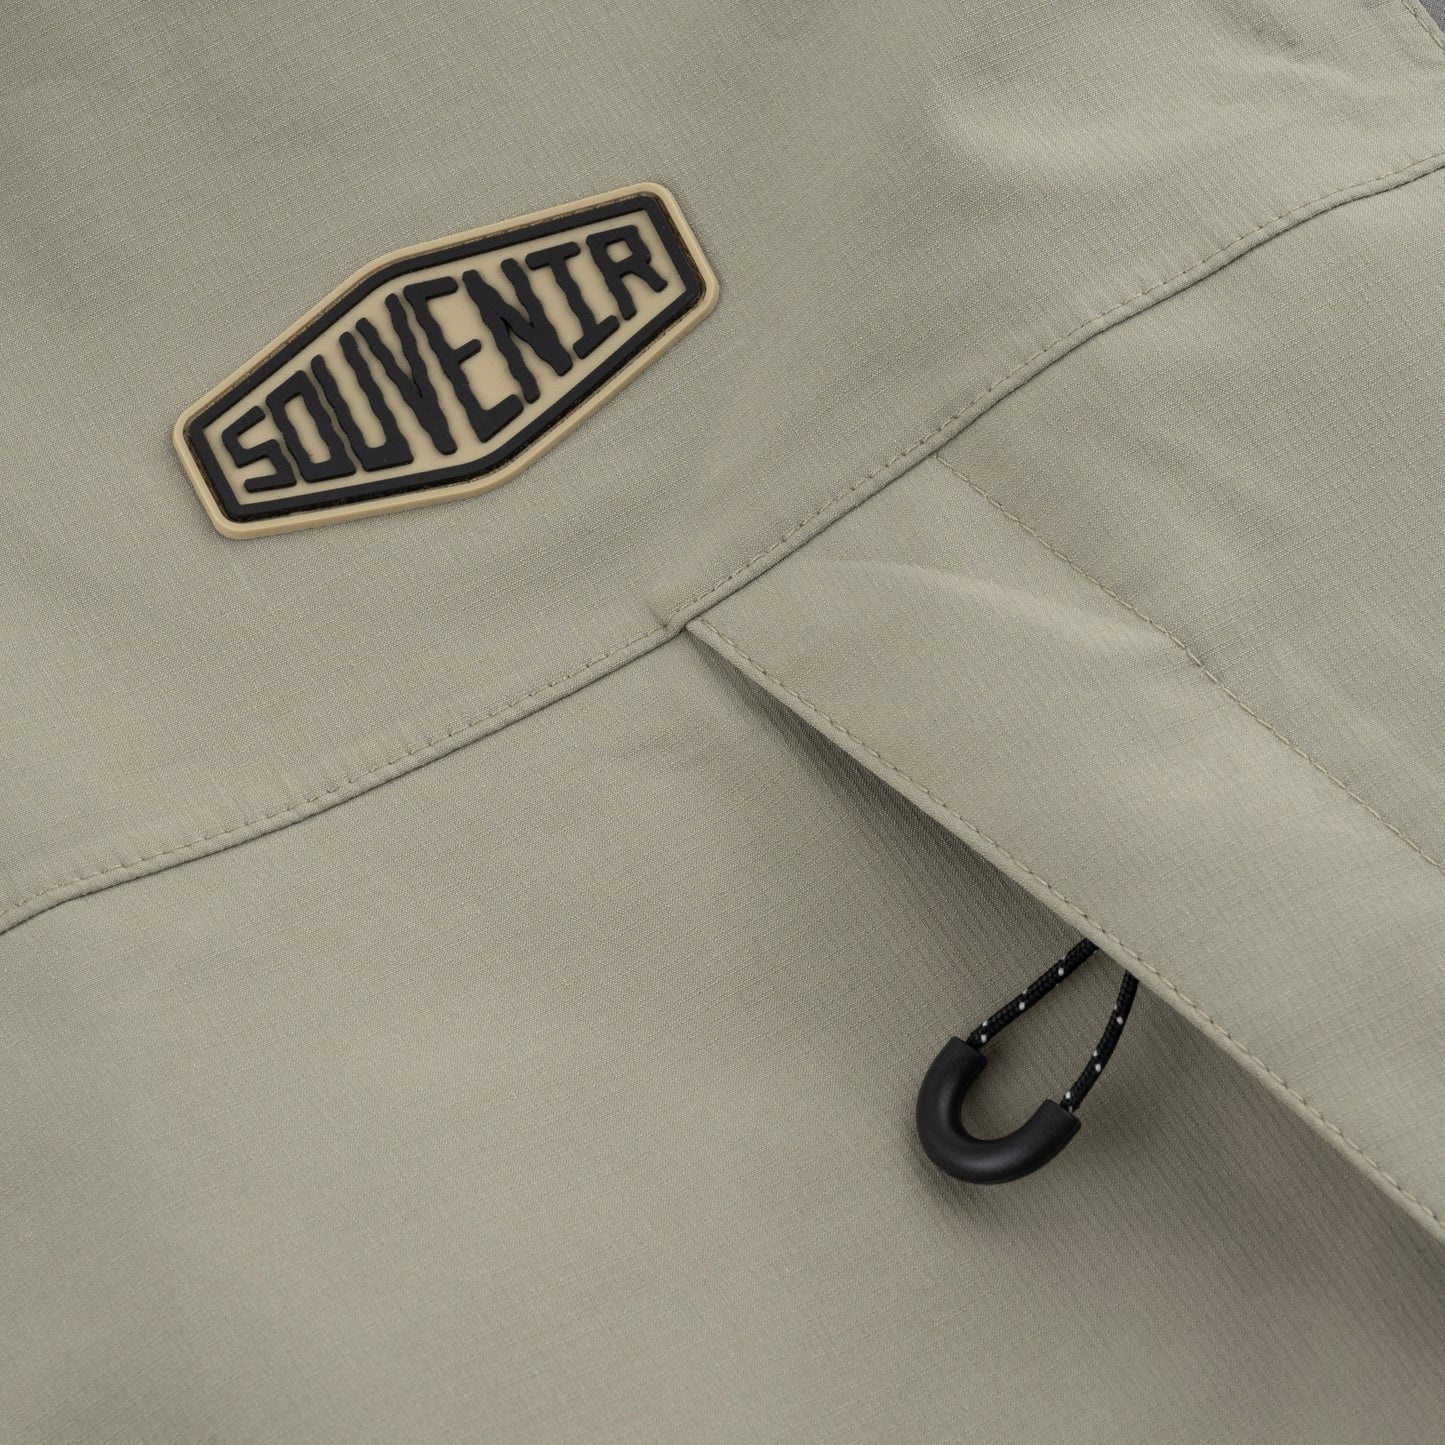 Souvenir Souvenir 3 Layer Ripstop Shell Jacket